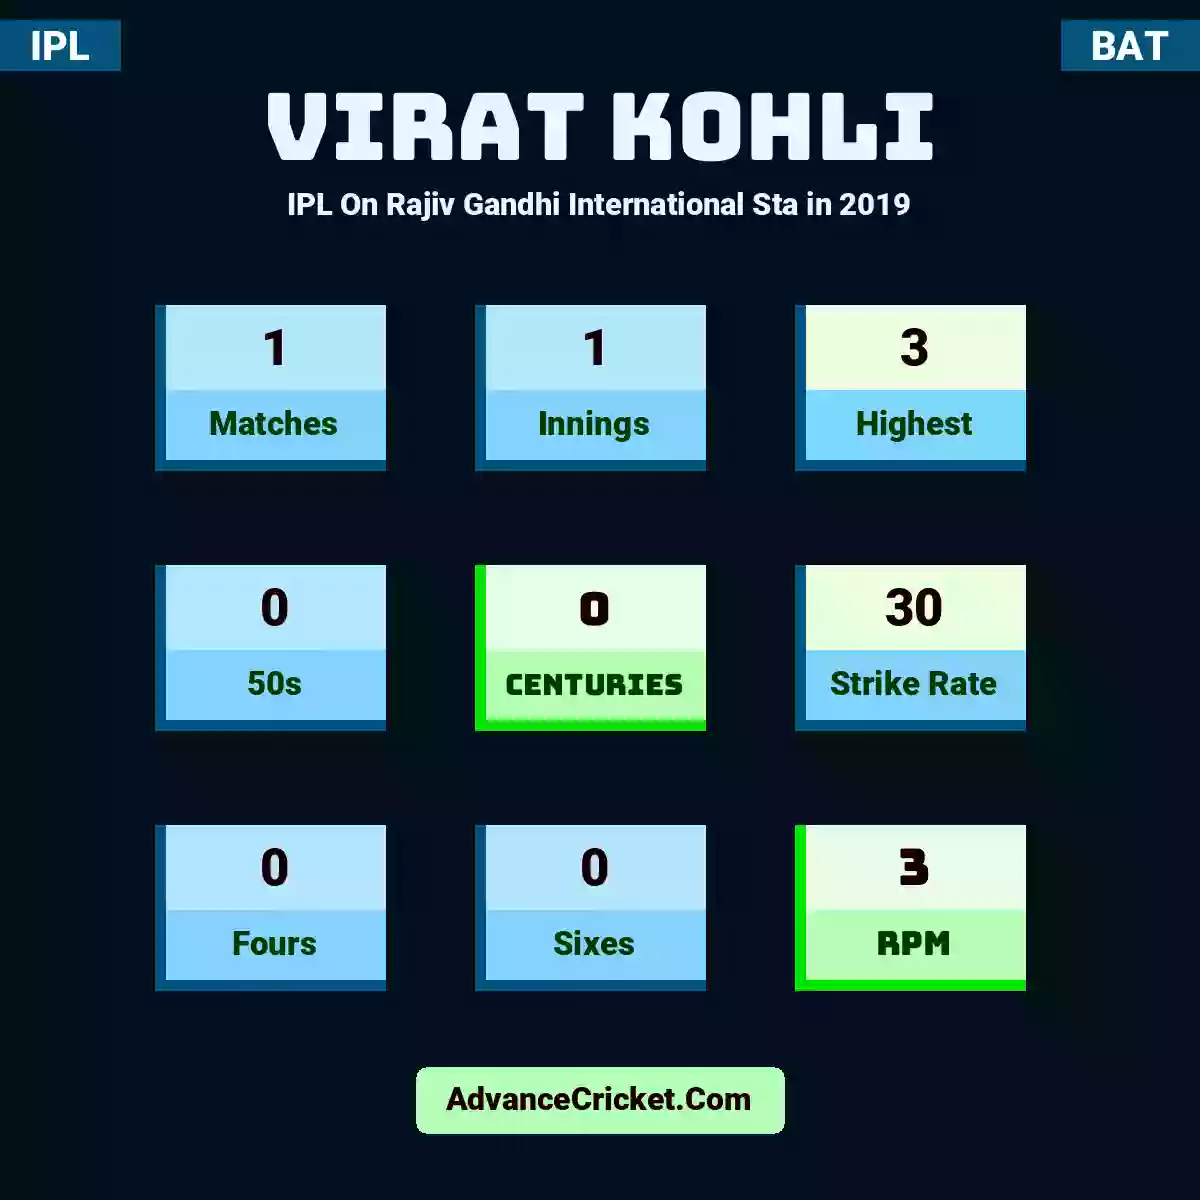 Virat Kohli IPL  On Rajiv Gandhi International Sta in 2019, Virat Kohli played 1 matches, scored 3 runs as highest, 0 half-centuries, and 0 centuries, with a strike rate of 30. V.Kohli hit 0 fours and 0 sixes, with an RPM of 3.